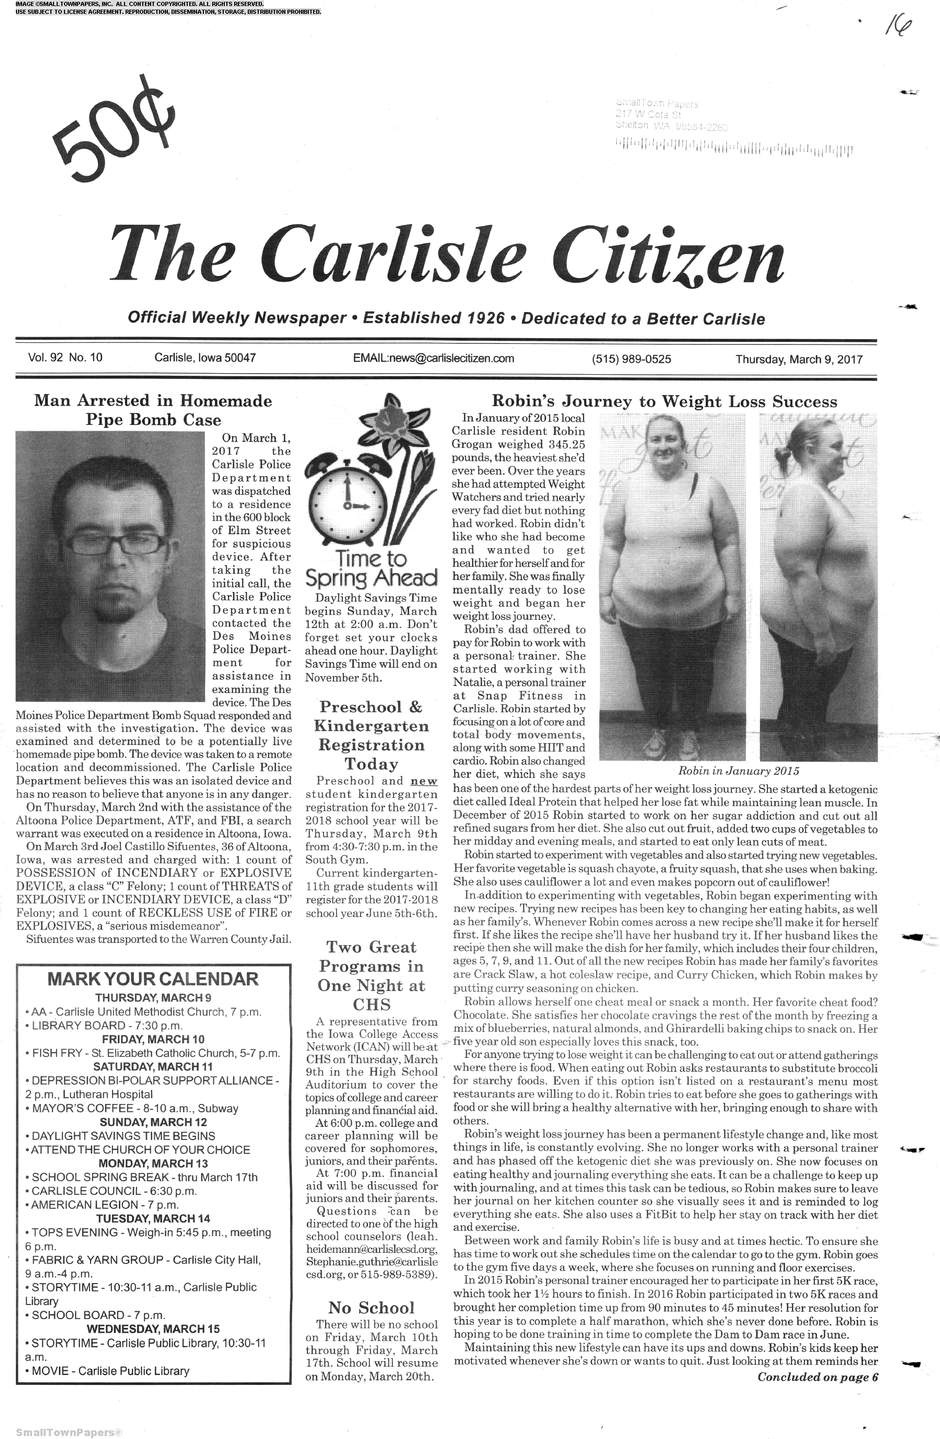 Carlisle Citizen